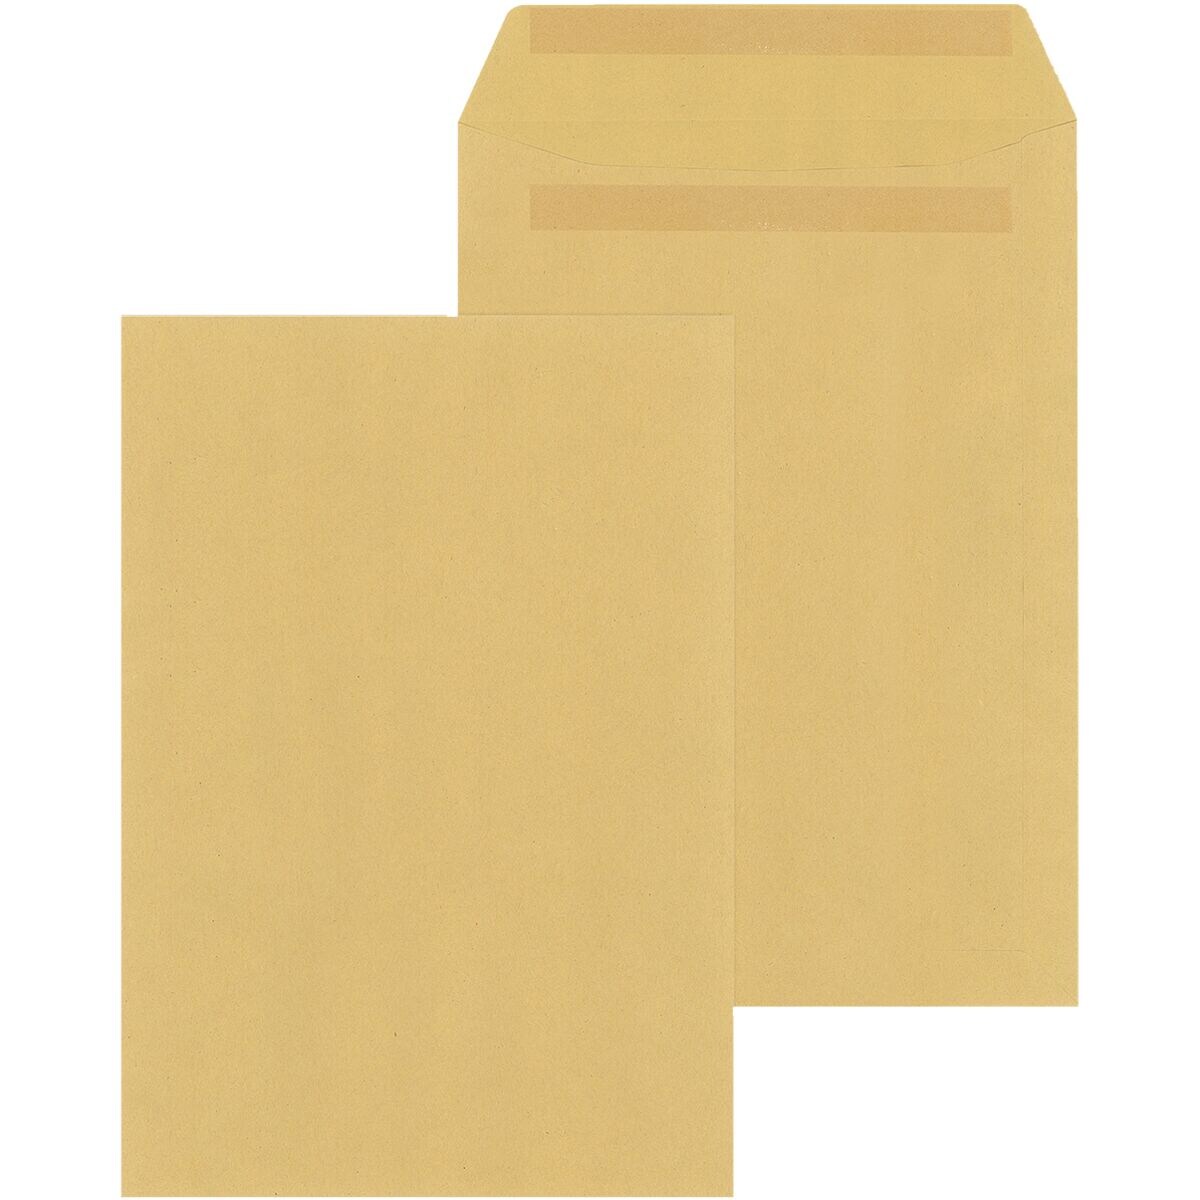 Mailmedia 250 Natron-enveloppen, C4 zonder venster